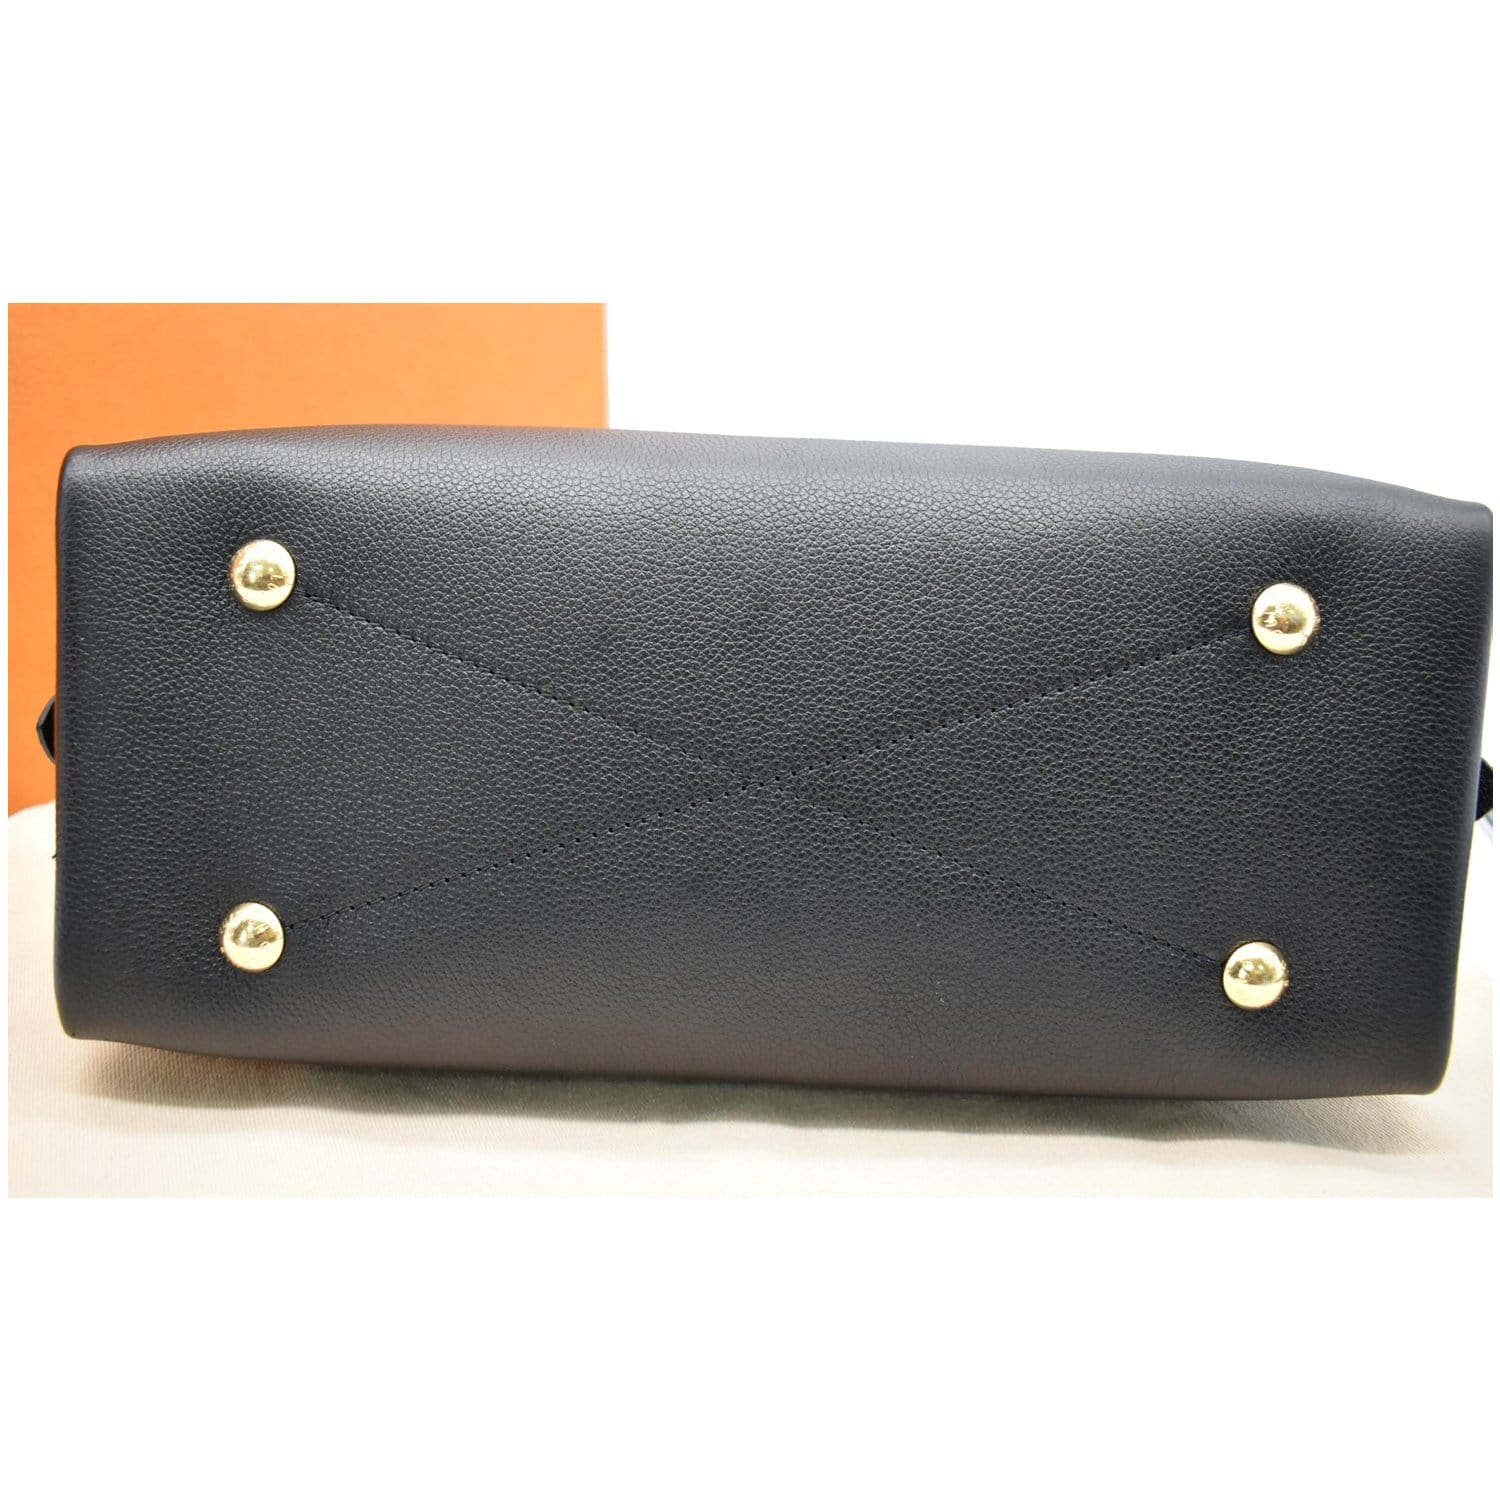 Louis Vuitton Neo Alma Handbag Monogram Empreinte Leather PM Black 66639120